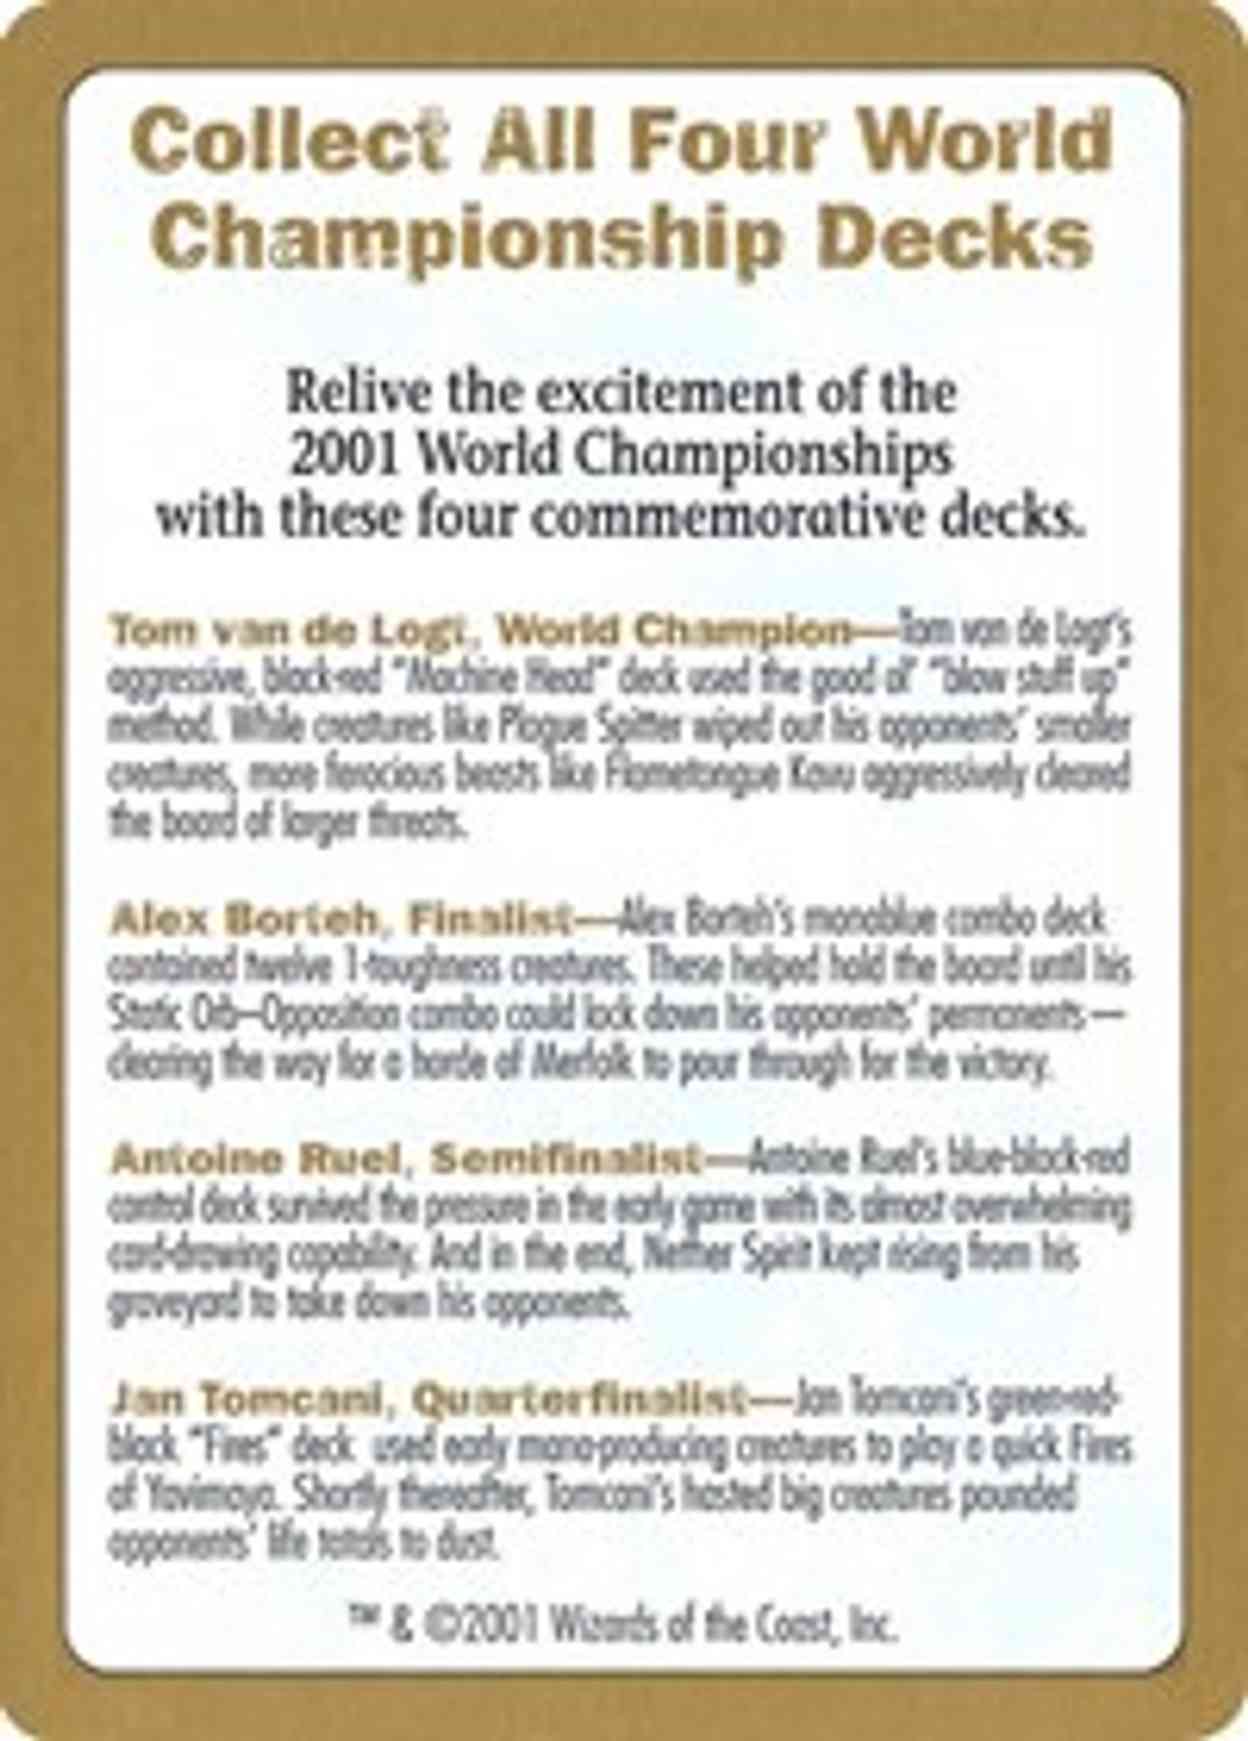 2001 World Championship Advertisement Card magic card front